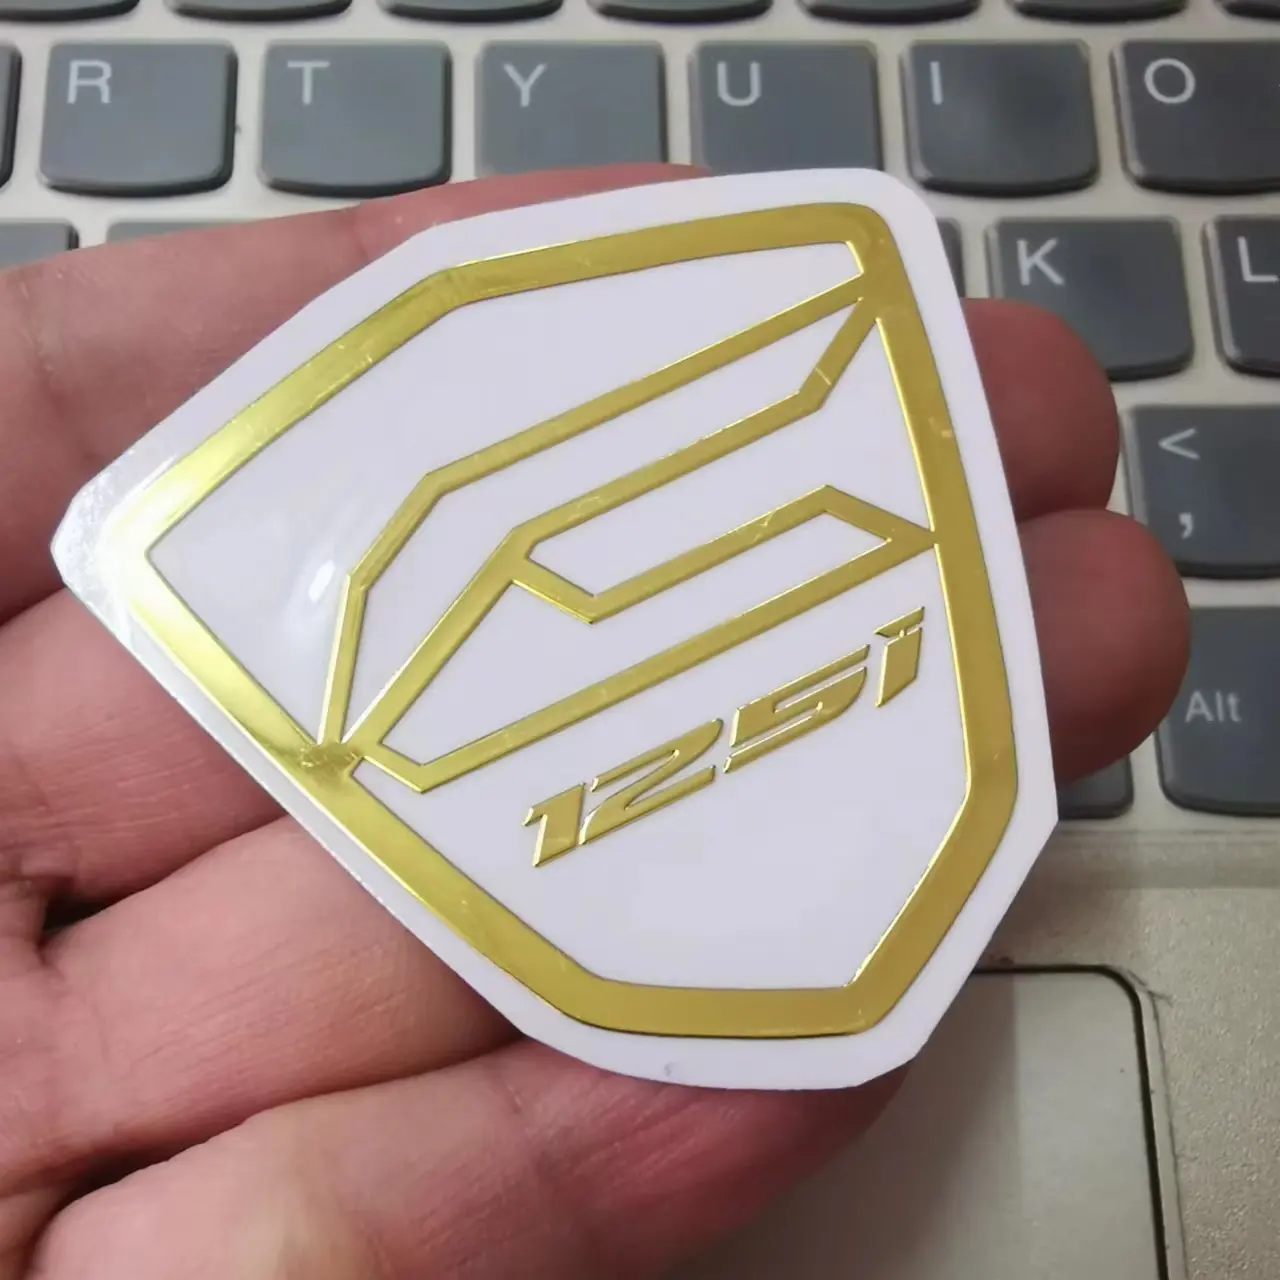 Pegatina adhesiva metálica 3D para hacer clic en motocicleta, pegatinas con logotipo personalizado de metal fino dorado para Honda Yamaha Suzuki kawaski ninja